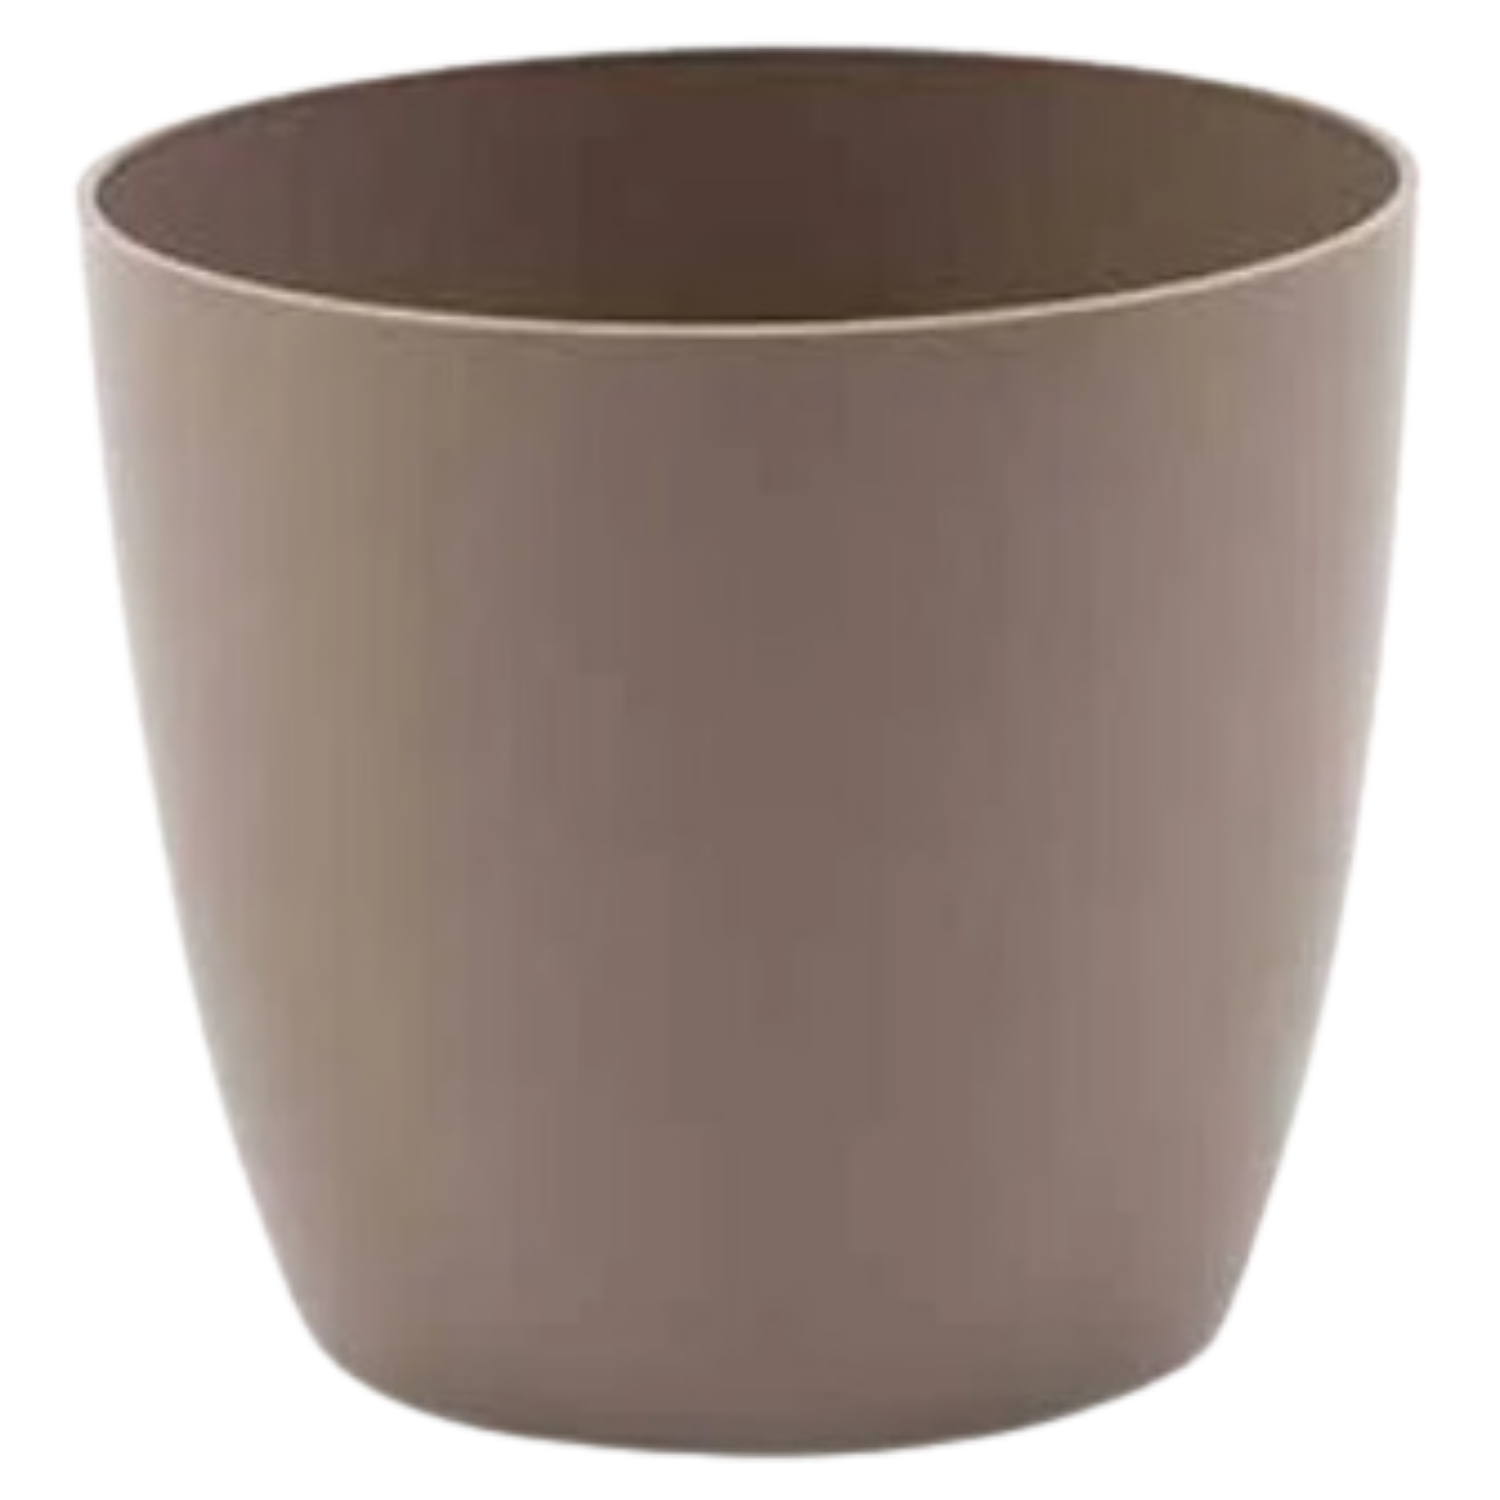 Valencia 25cm Round Plastic Pot for Home & Garden